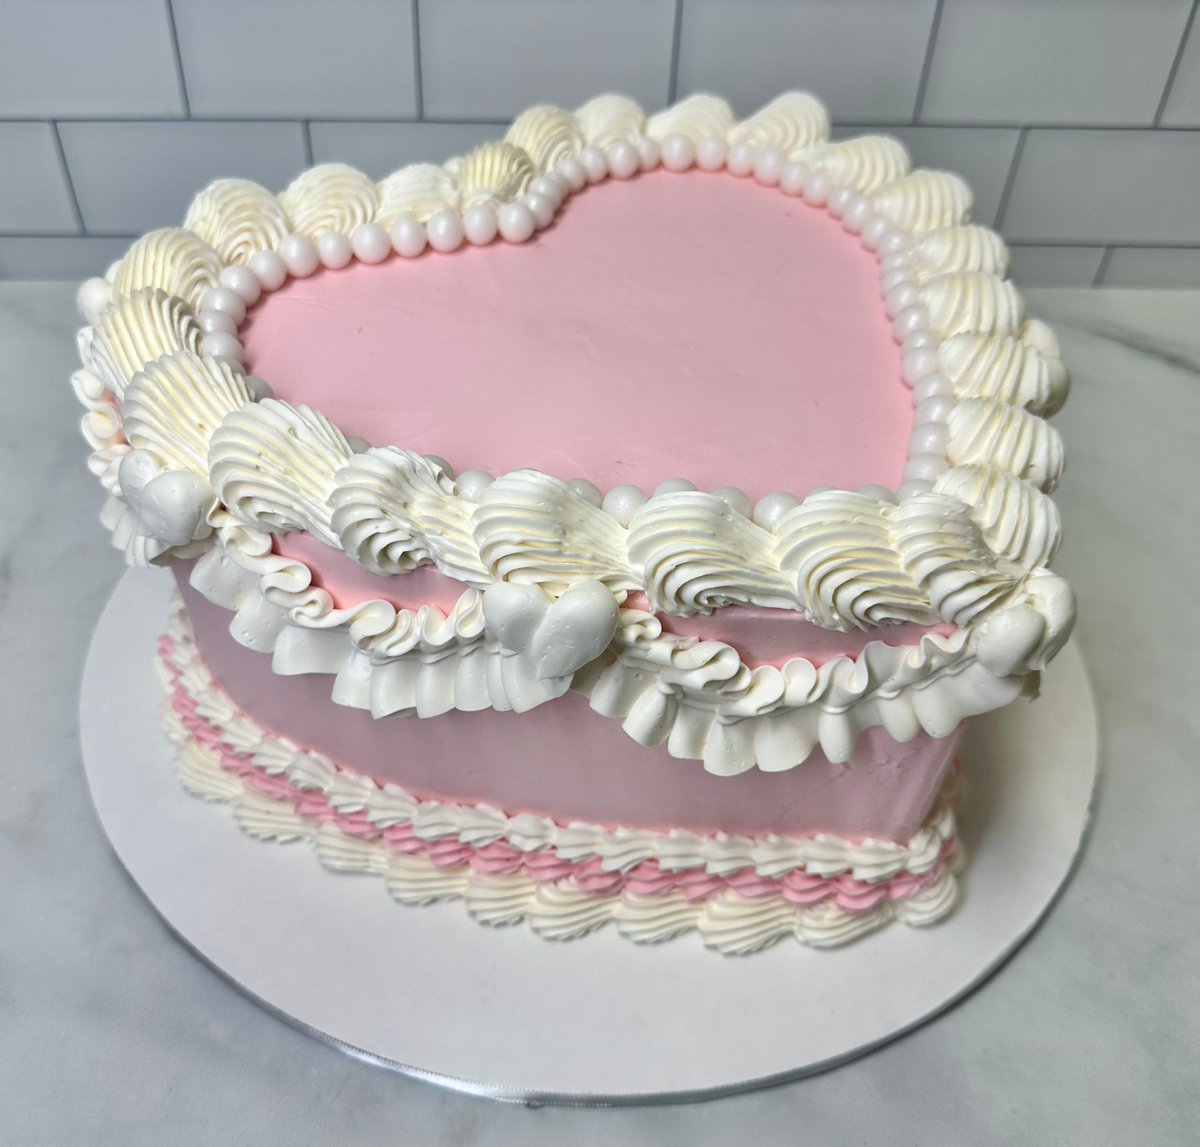 Our lambeth piping heart cake. Beautiful and customizable 😍

#lambethcake #kupcakekitchen #wantcake #heartcake #heartcakes #heartshapedcake  #lambethcakes #cakeforlove #cakeart #birthdaycakeideas #cakeinspo #designercakes #customcakes #beautifulcakes #amazingcakes #santaclarita